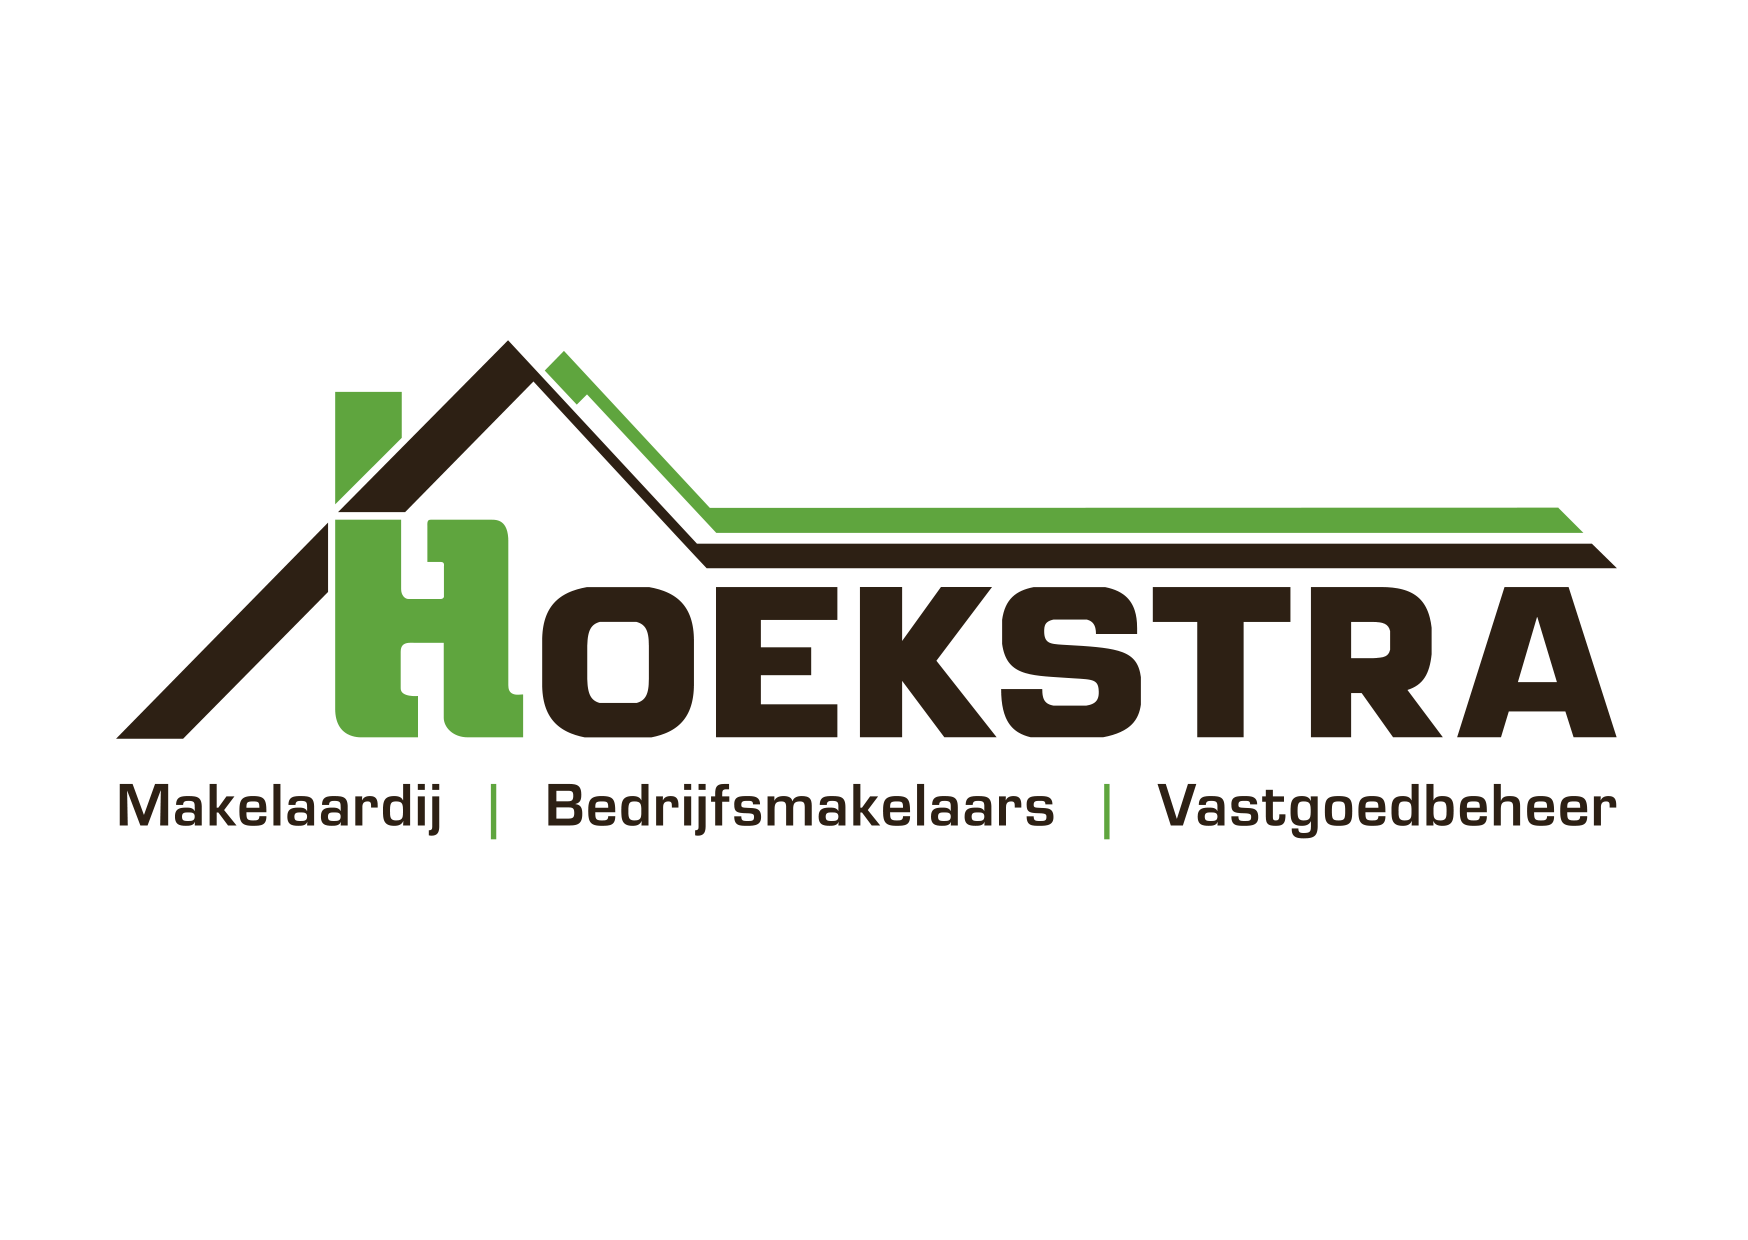 Hoekstra Makelaardij logo